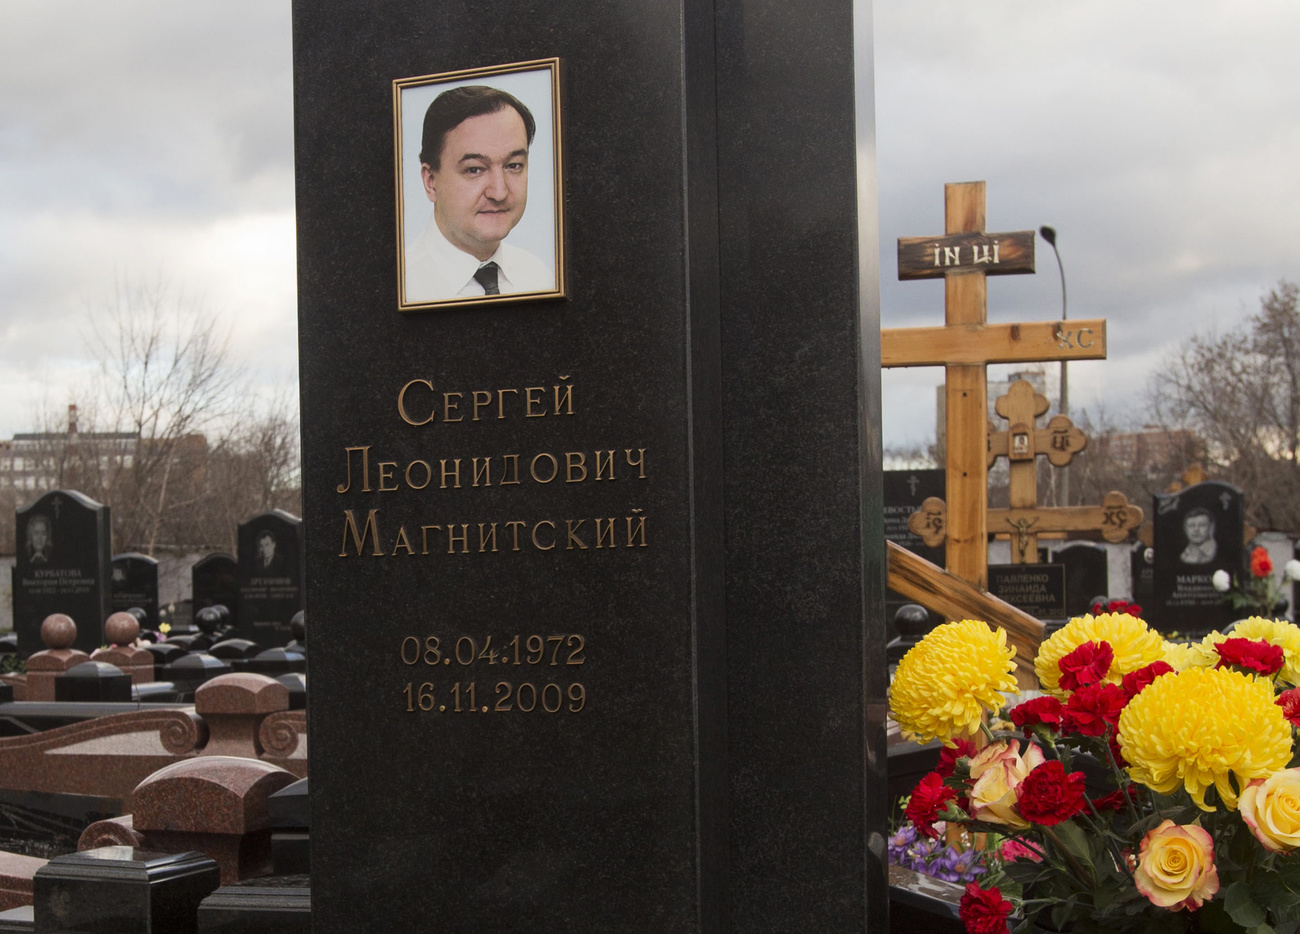 The grave of Sergei Magnitsky